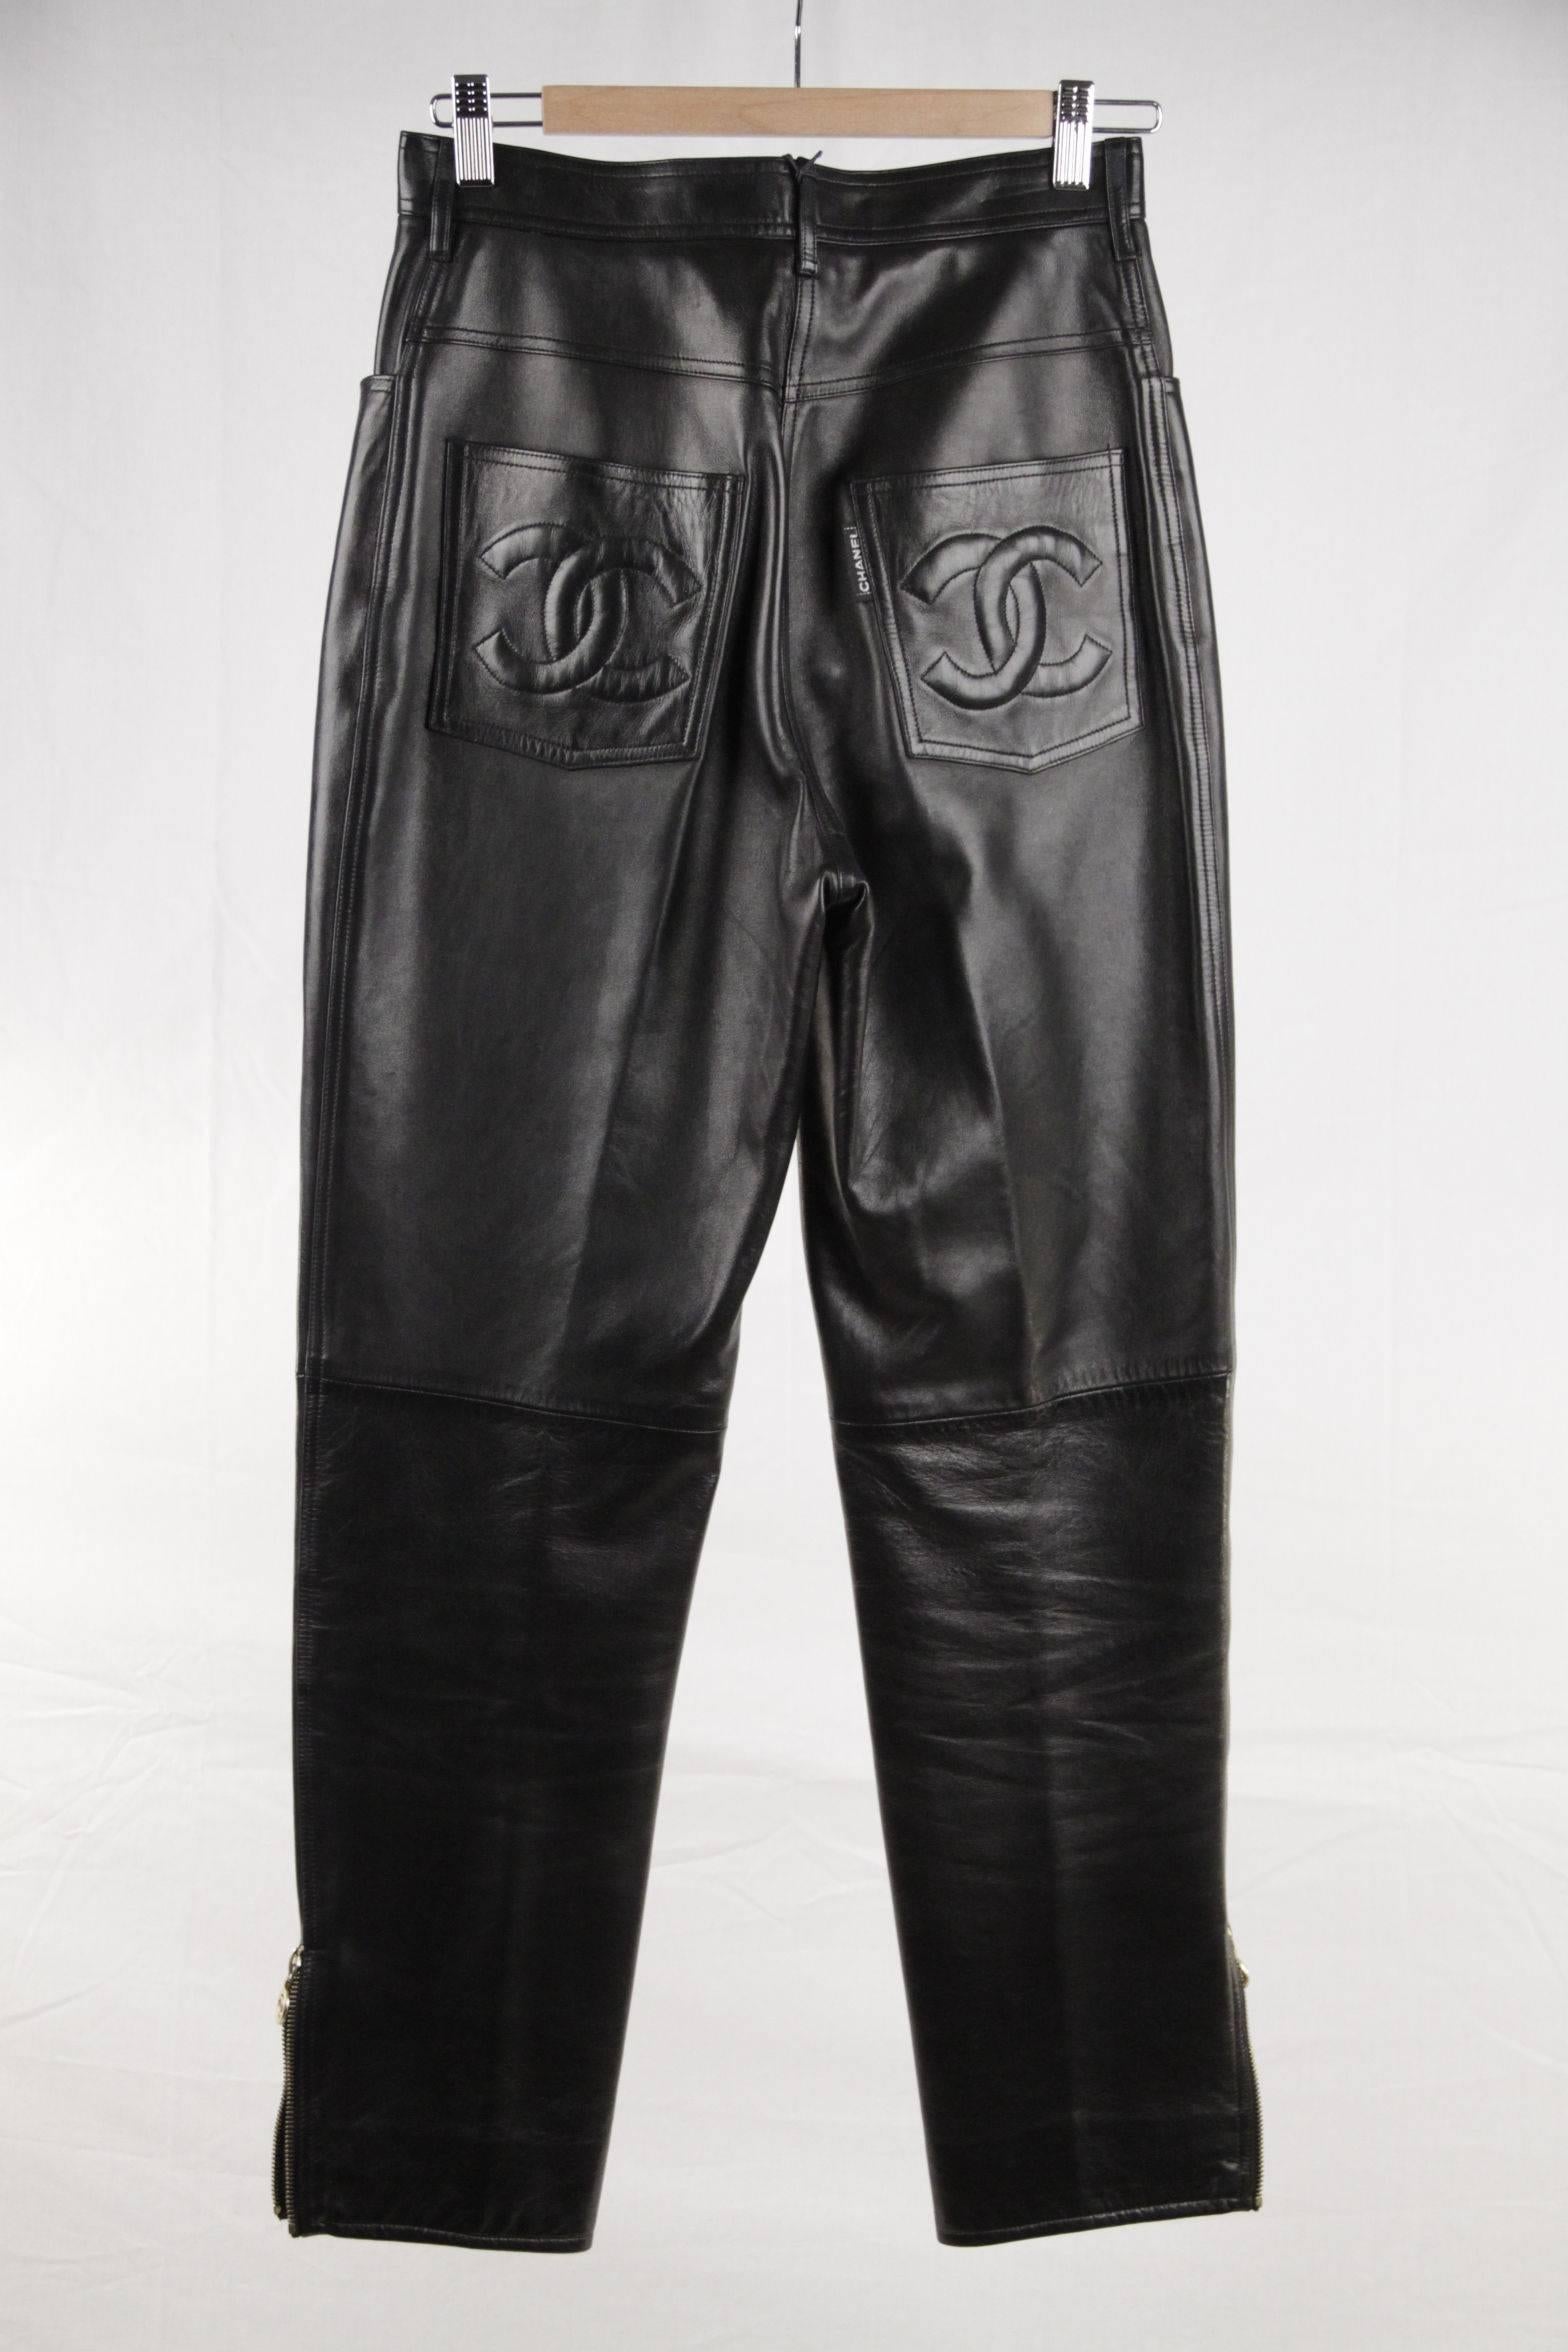 CHANEL BOUTIQUE Black Leather BIKER PANTS Trousers w/ ANKLE ZIP 1